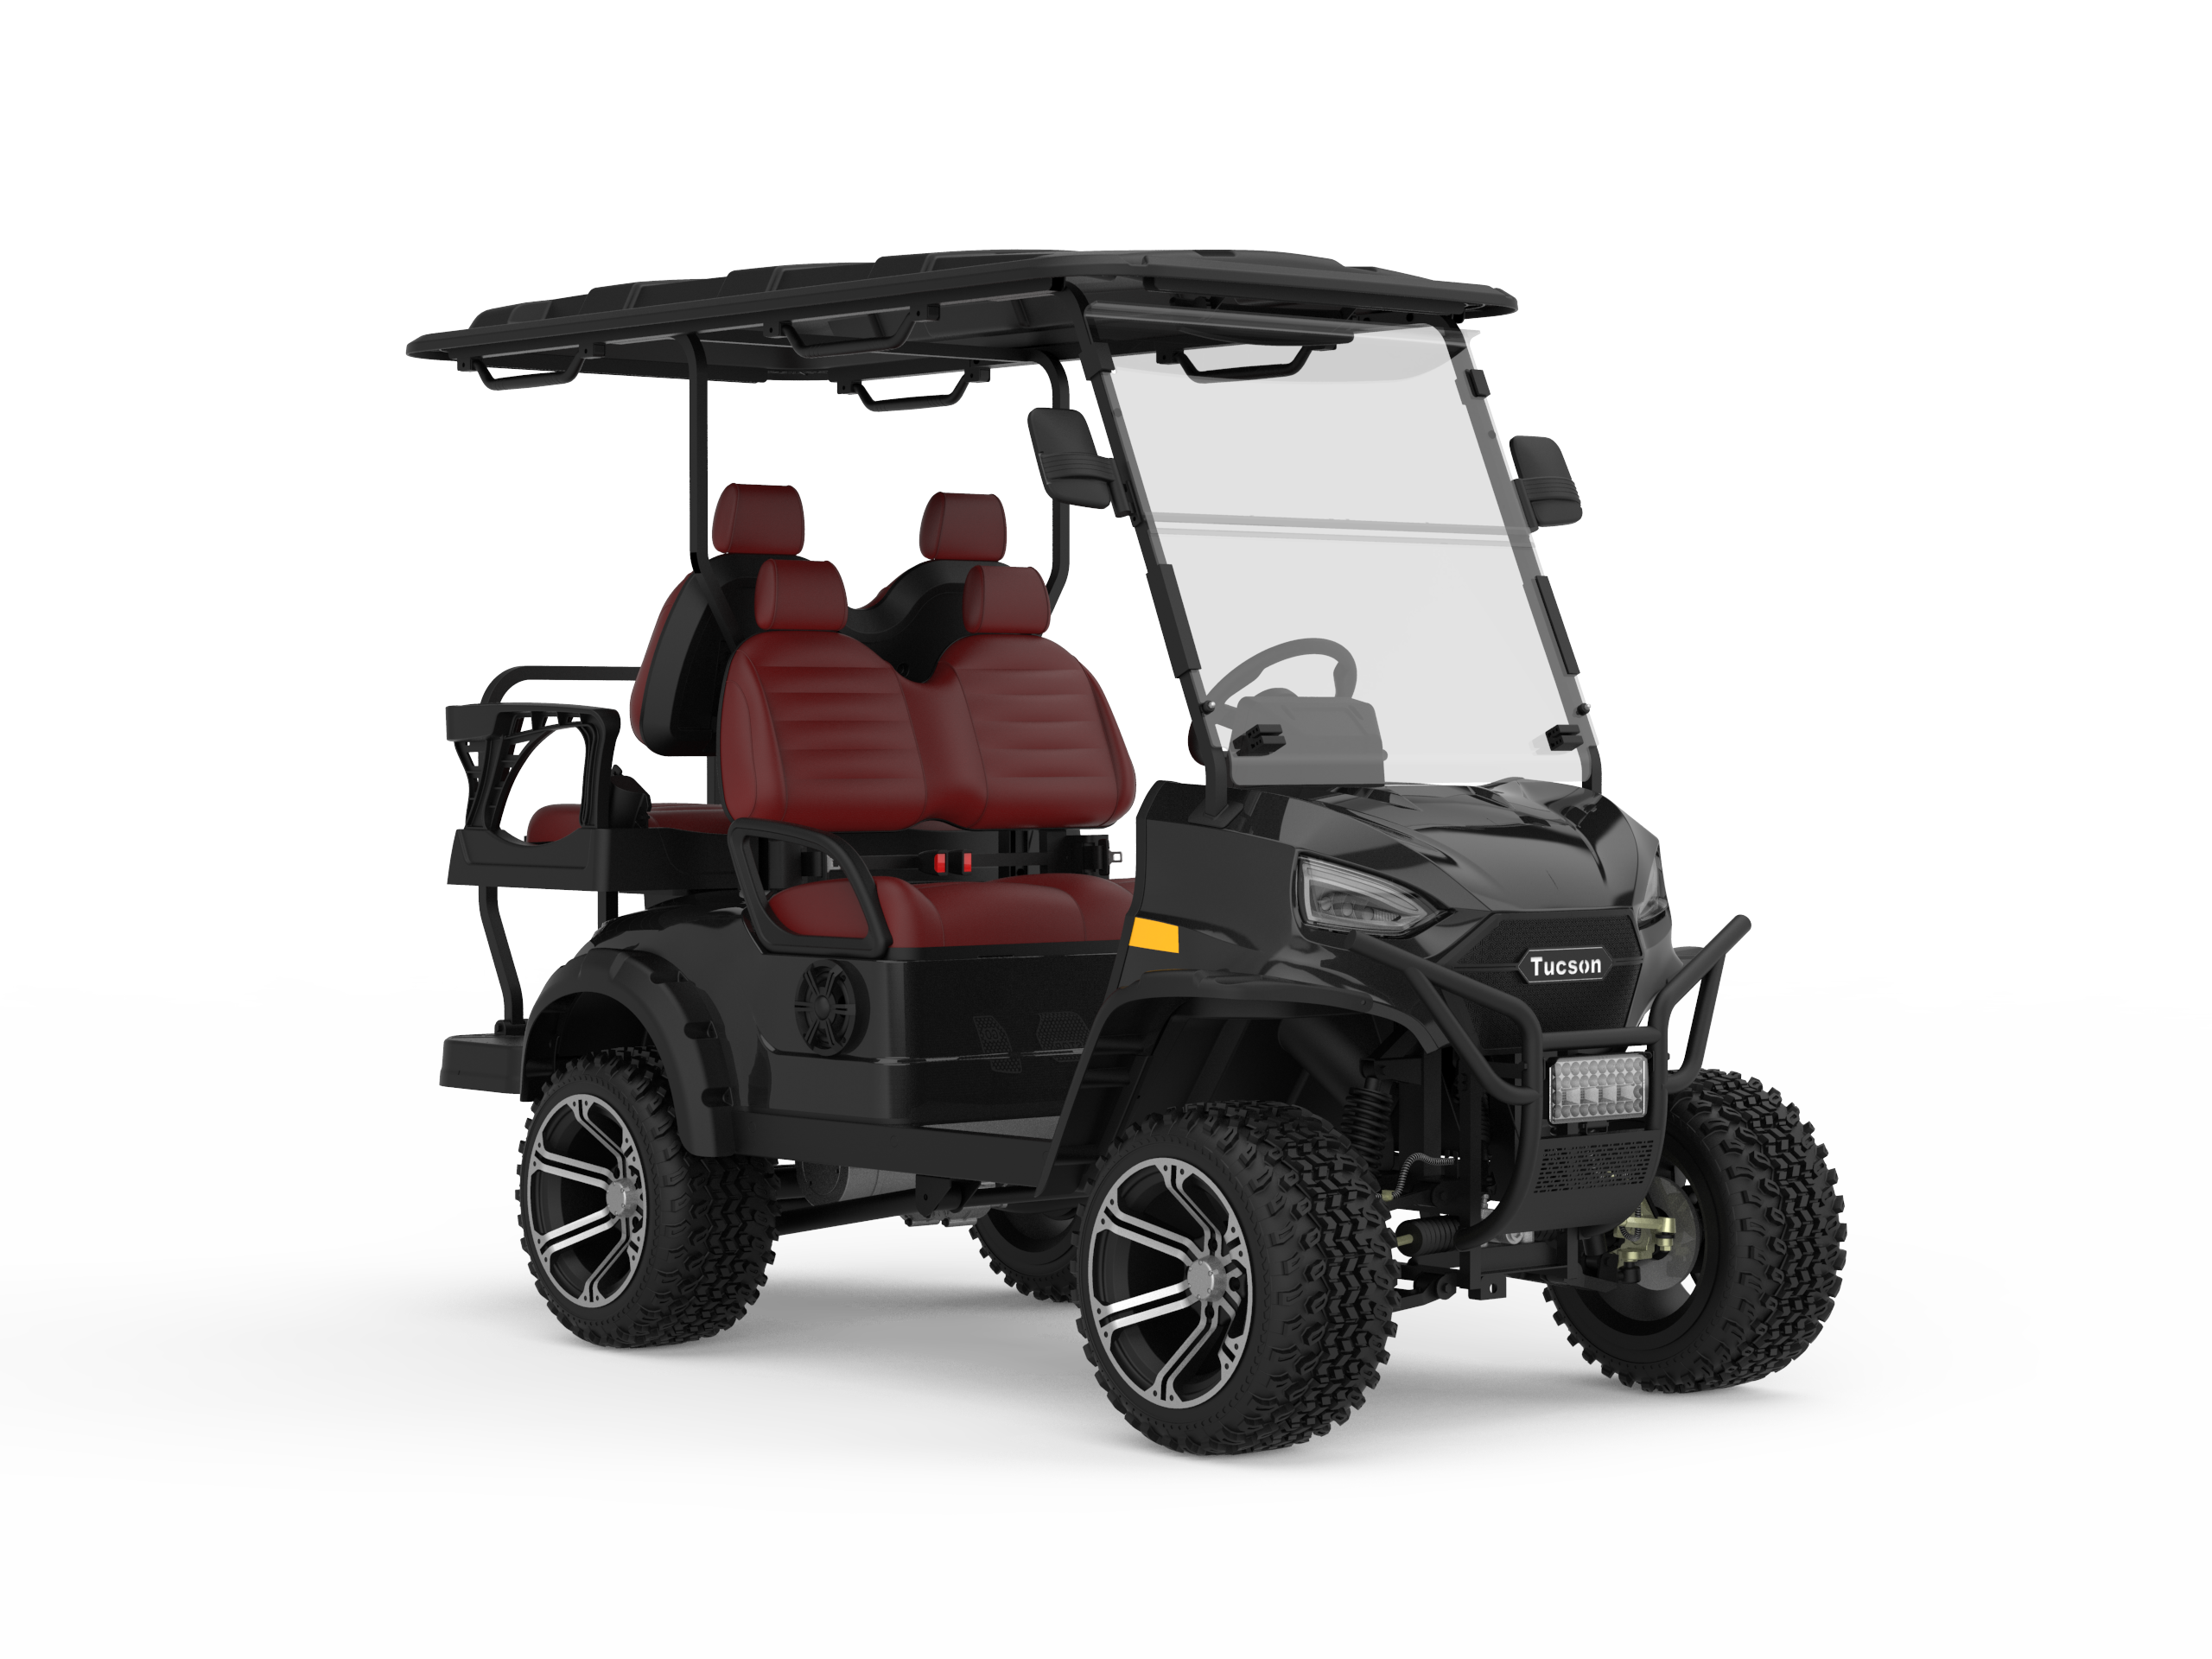 Borcart fabbrika tal-golf cart elettriku